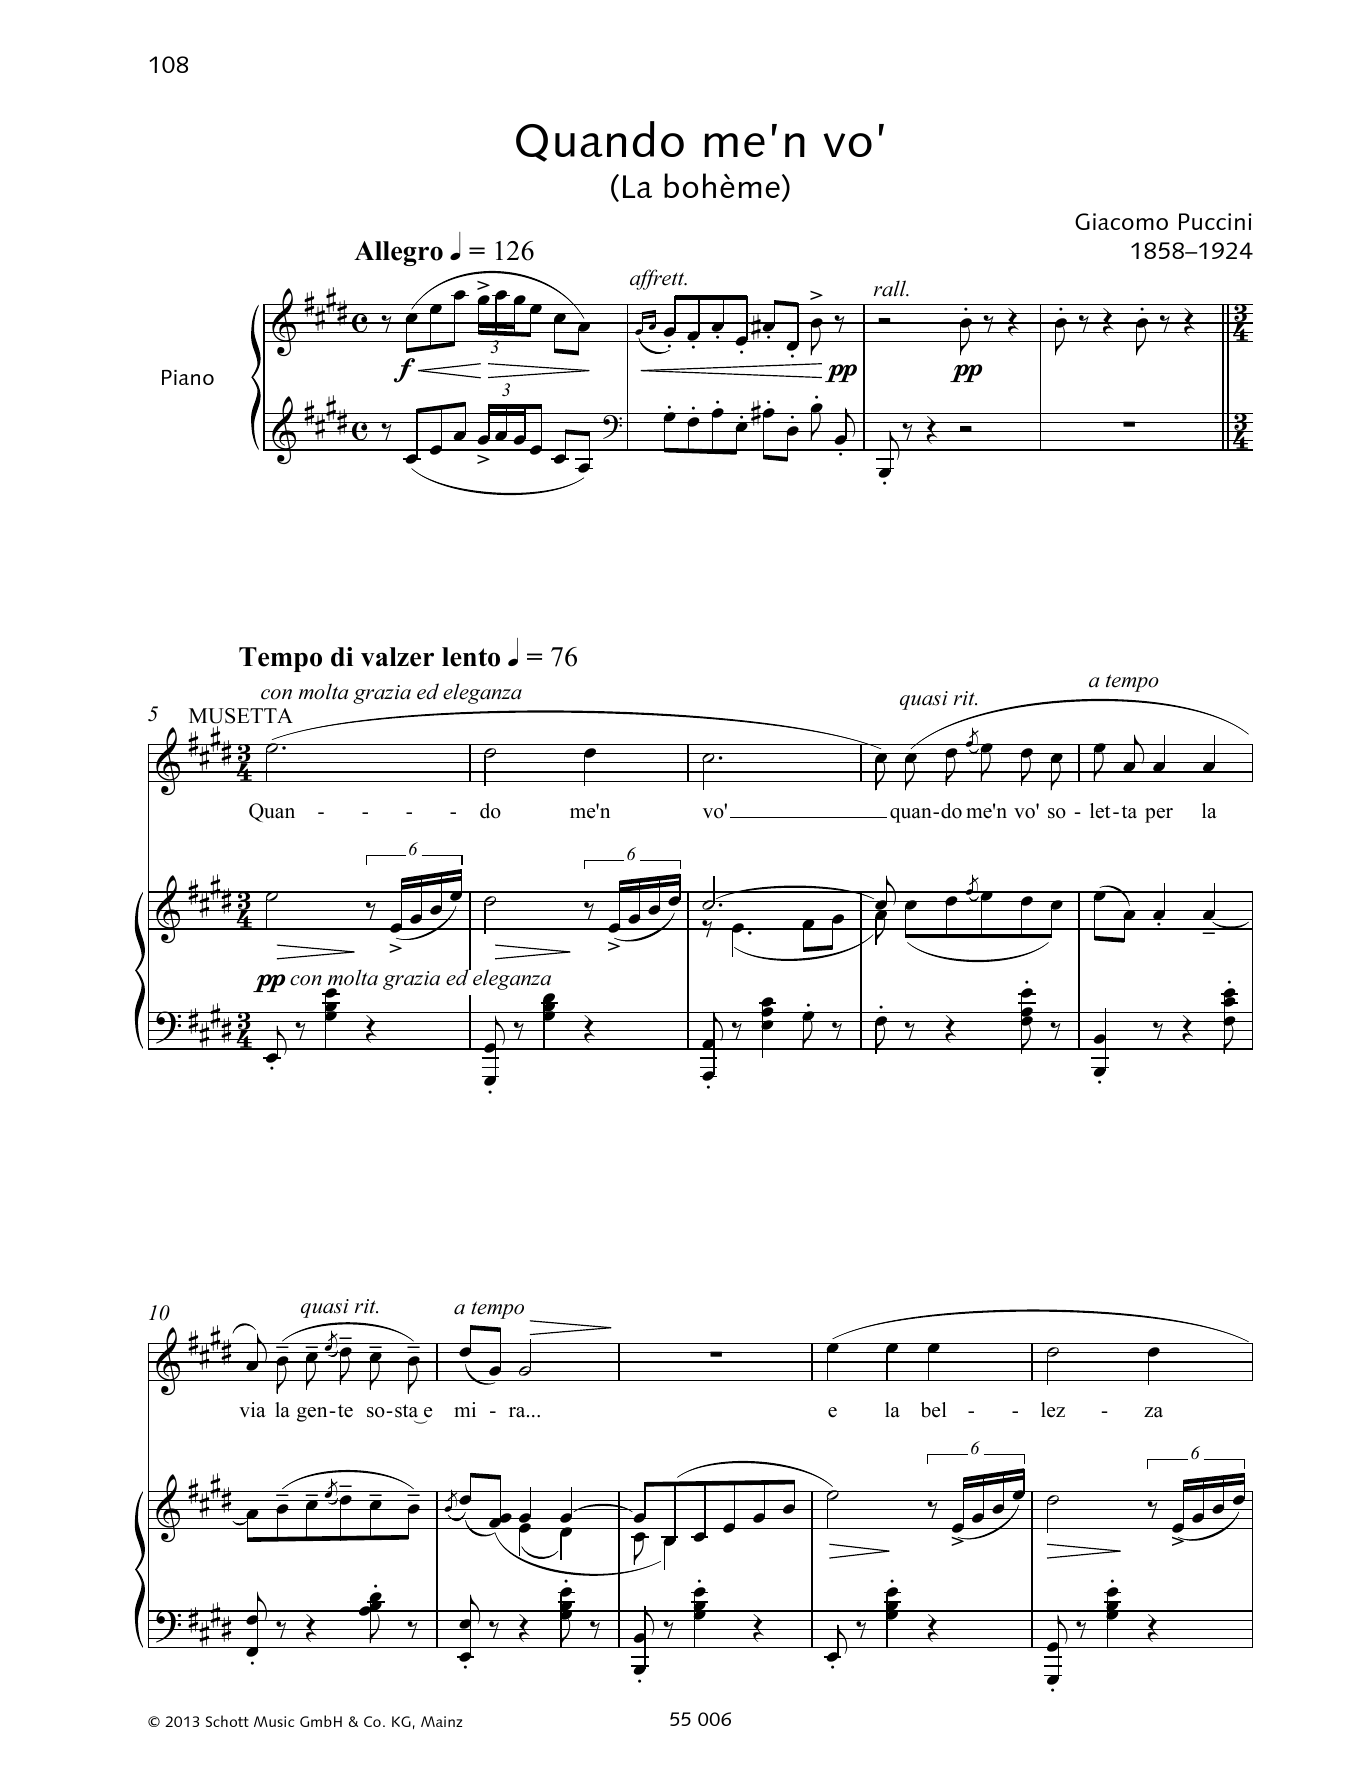 Francesca Licciarda Quando m'en vo' Sheet Music Notes & Chords for Piano & Vocal - Download or Print PDF